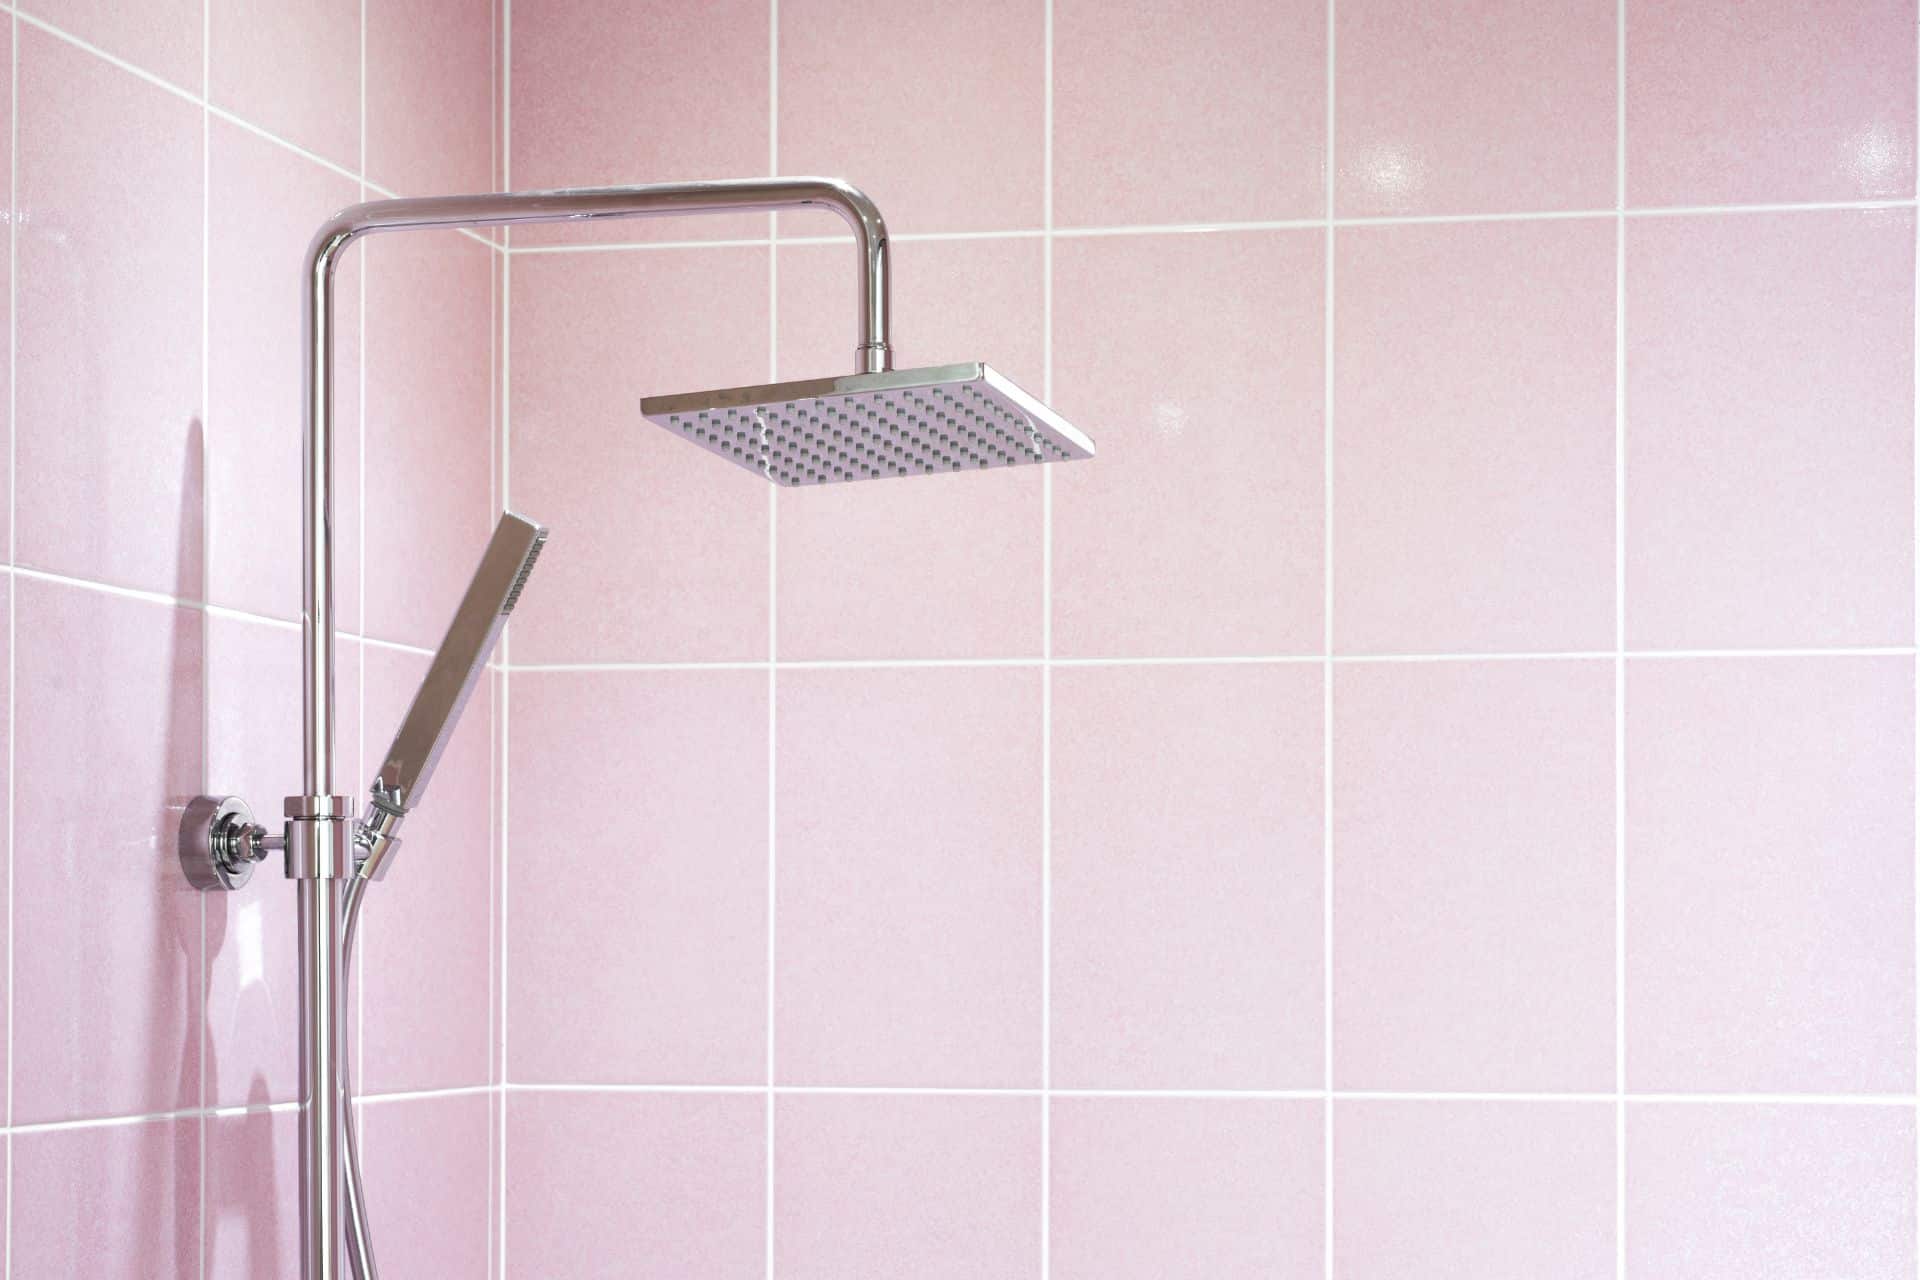 pink tile bathroom (2)